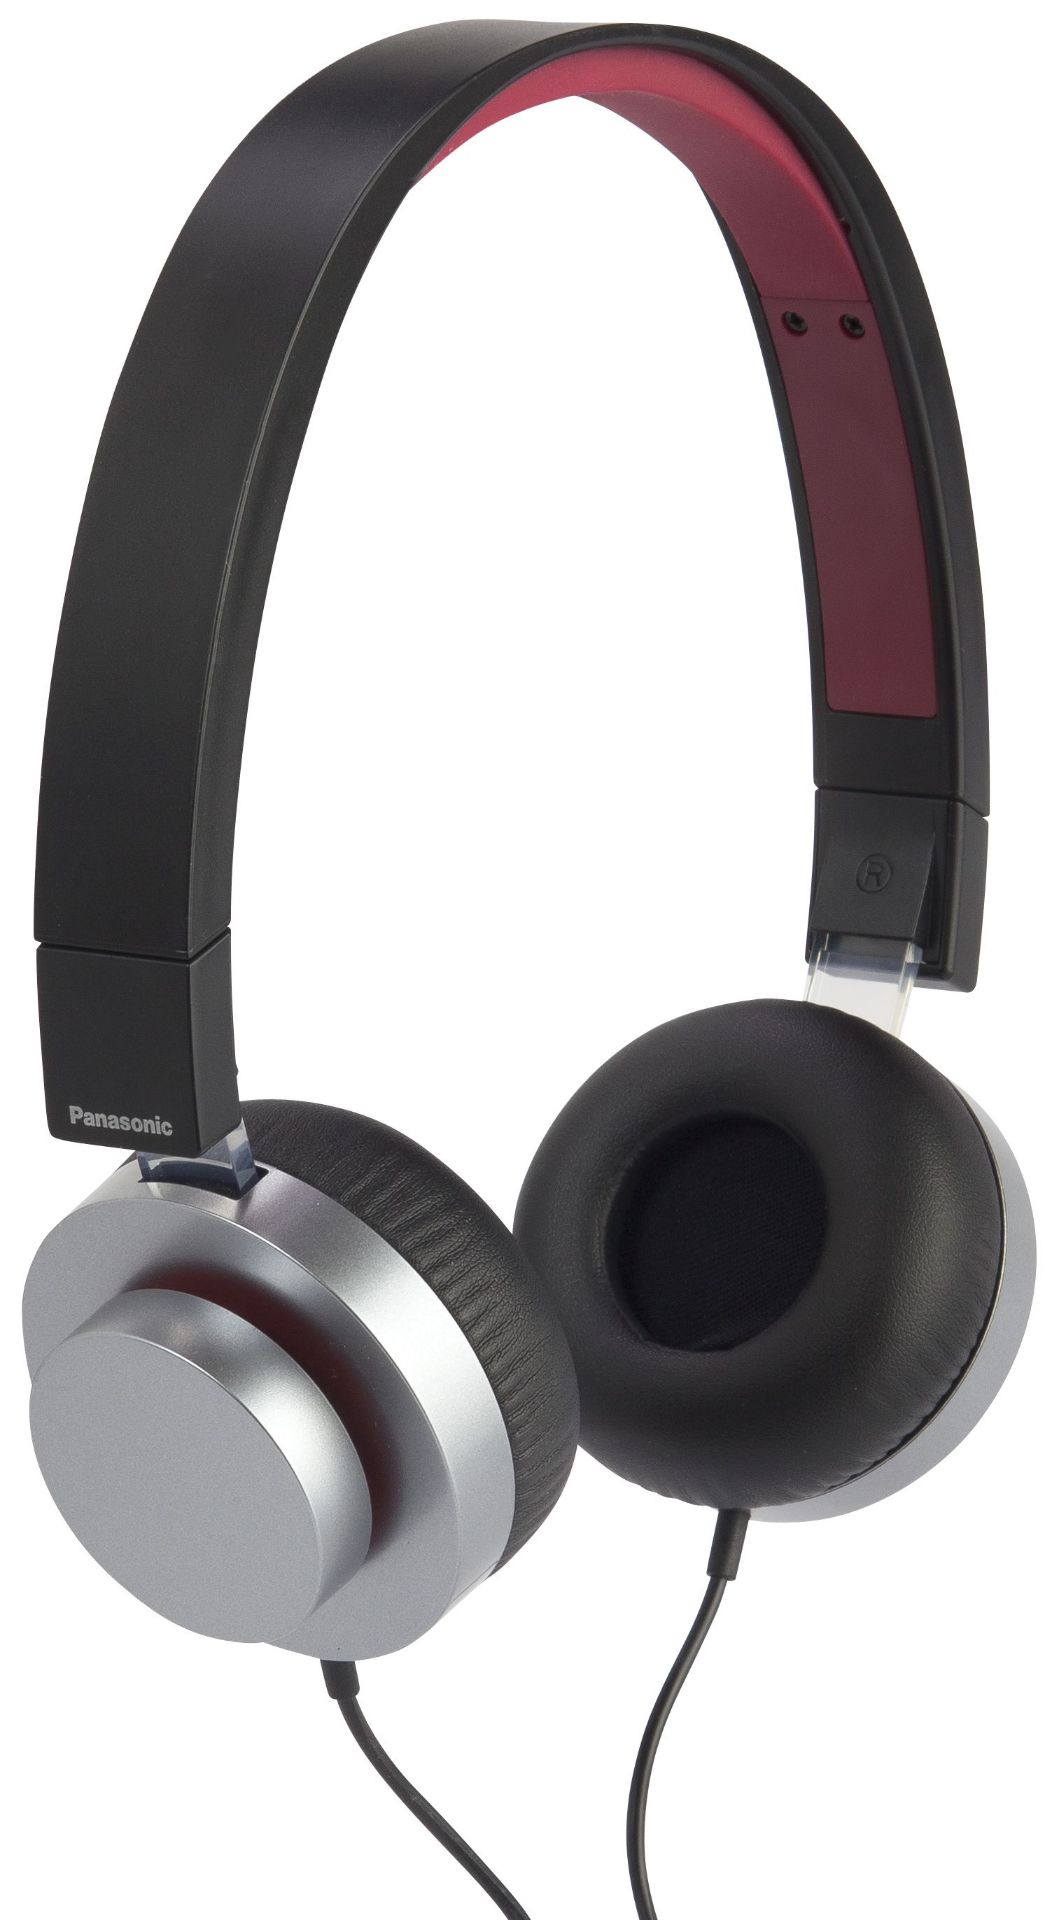 New boxed - Panasonic RP-HXD5W stereo headphones